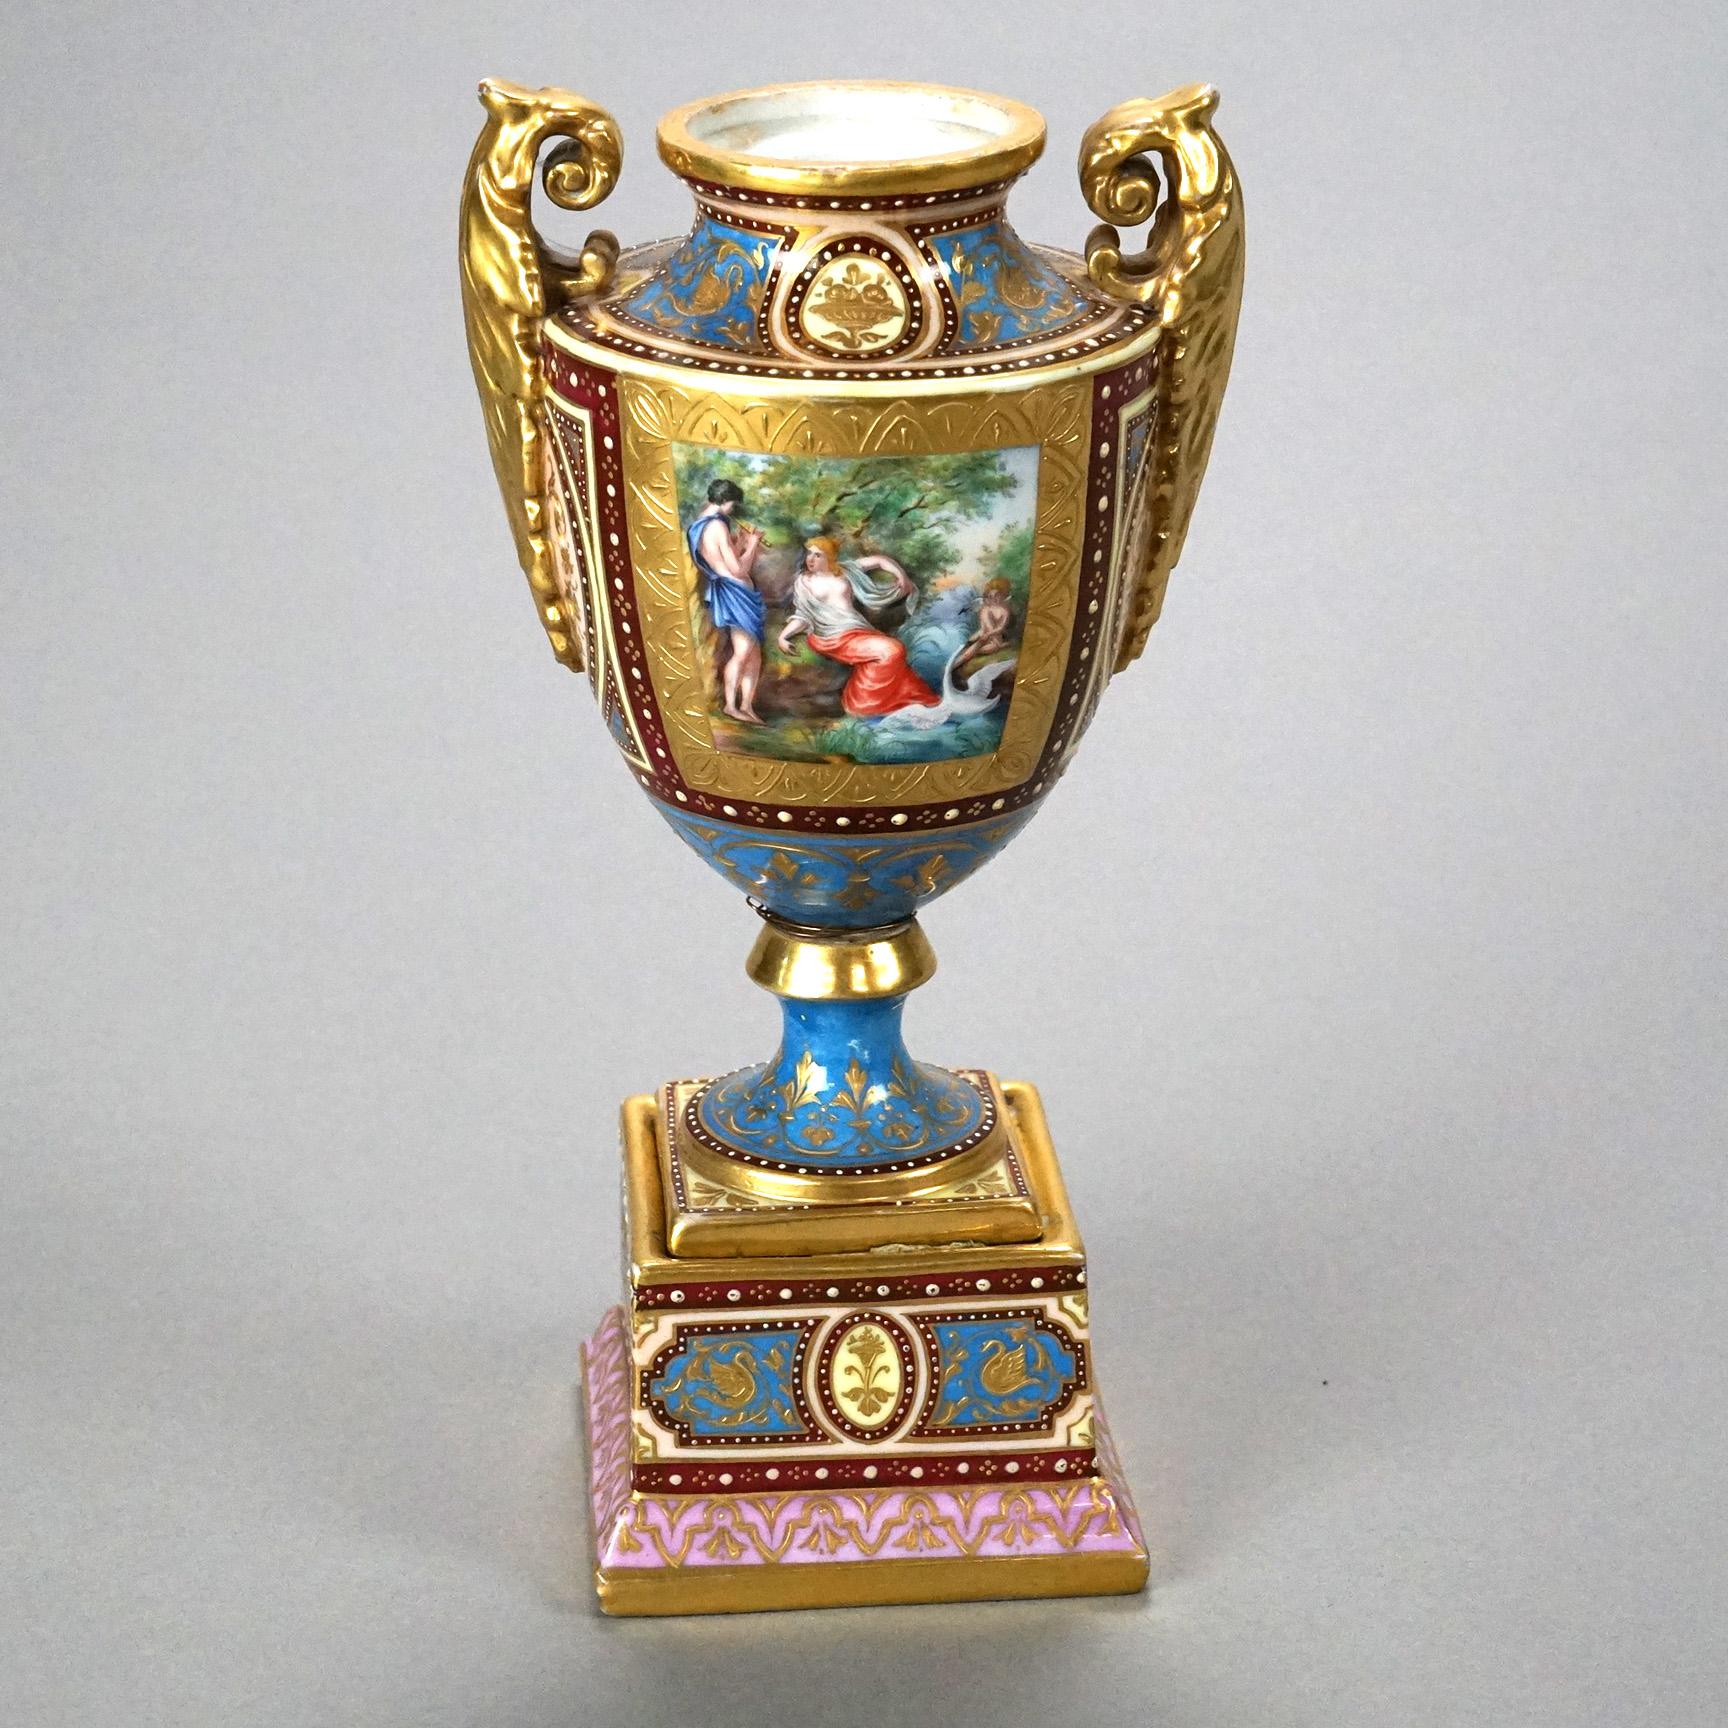 19th Century Antique Royal Vienna Hand Painted & Enamel Decorated Genre Scene Urns c1890